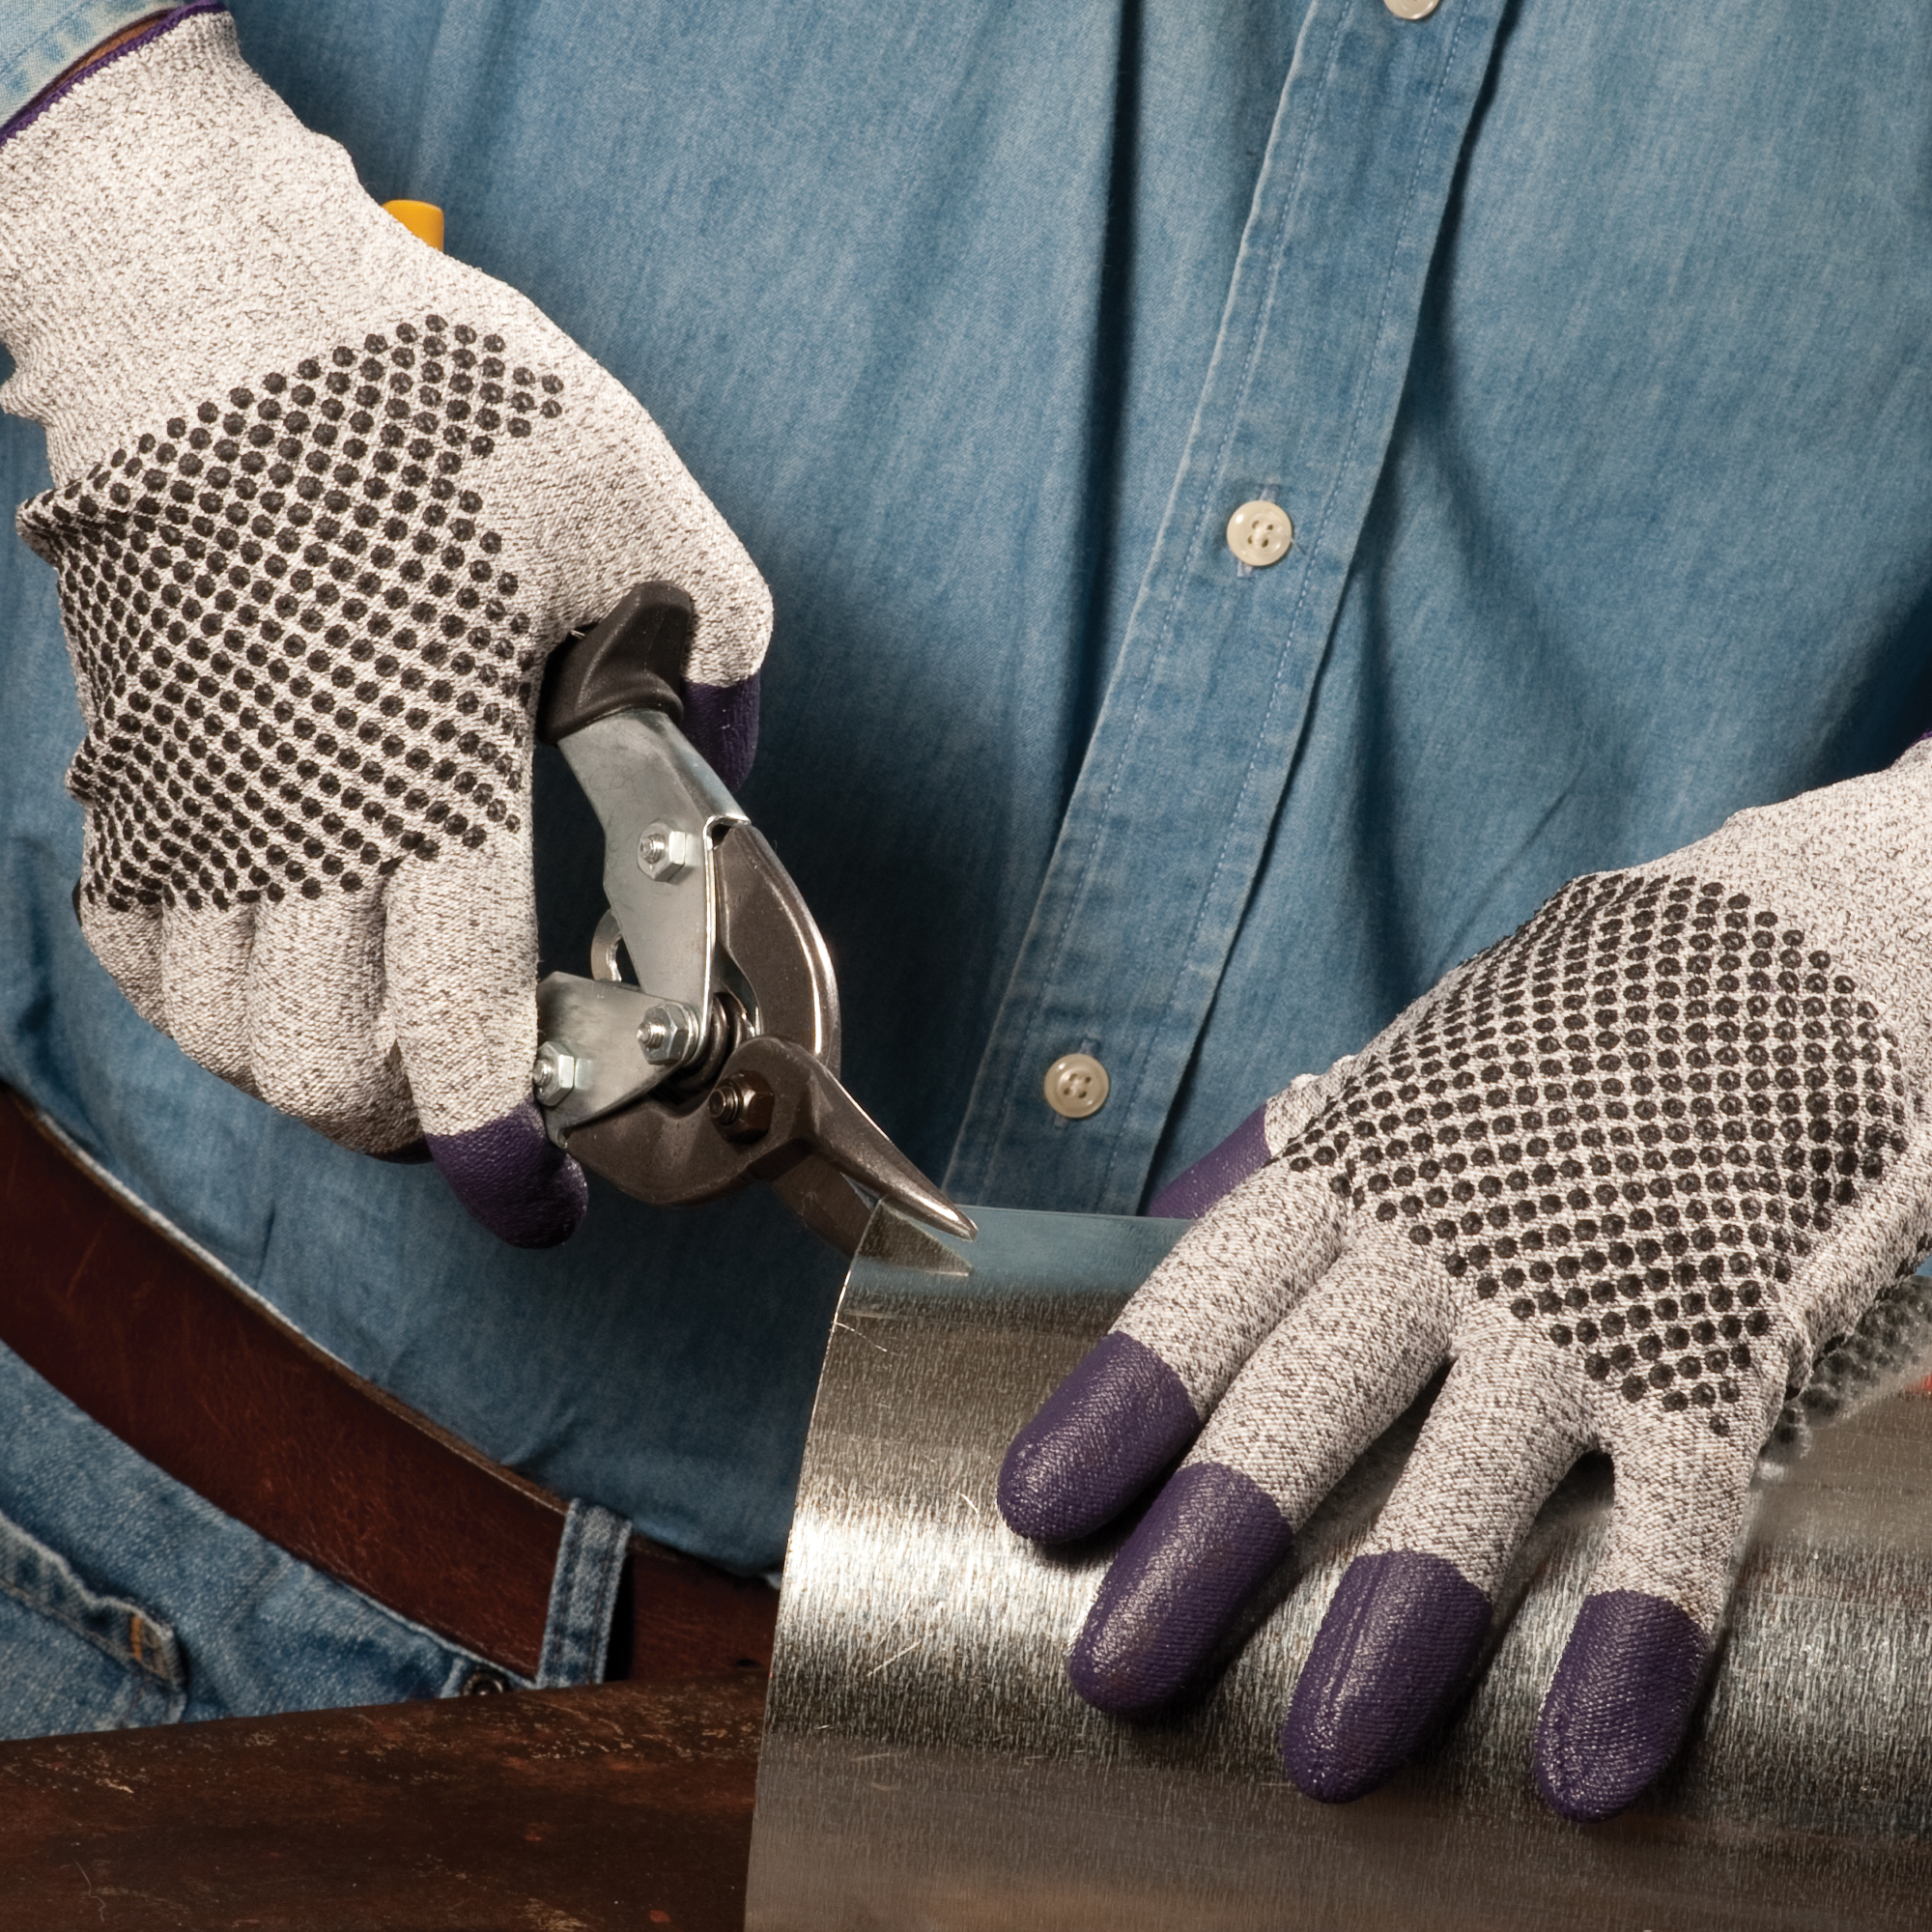 Picture of G60 Purple Nitrile Gloves, Medium/Size 8, Black/White, Pair